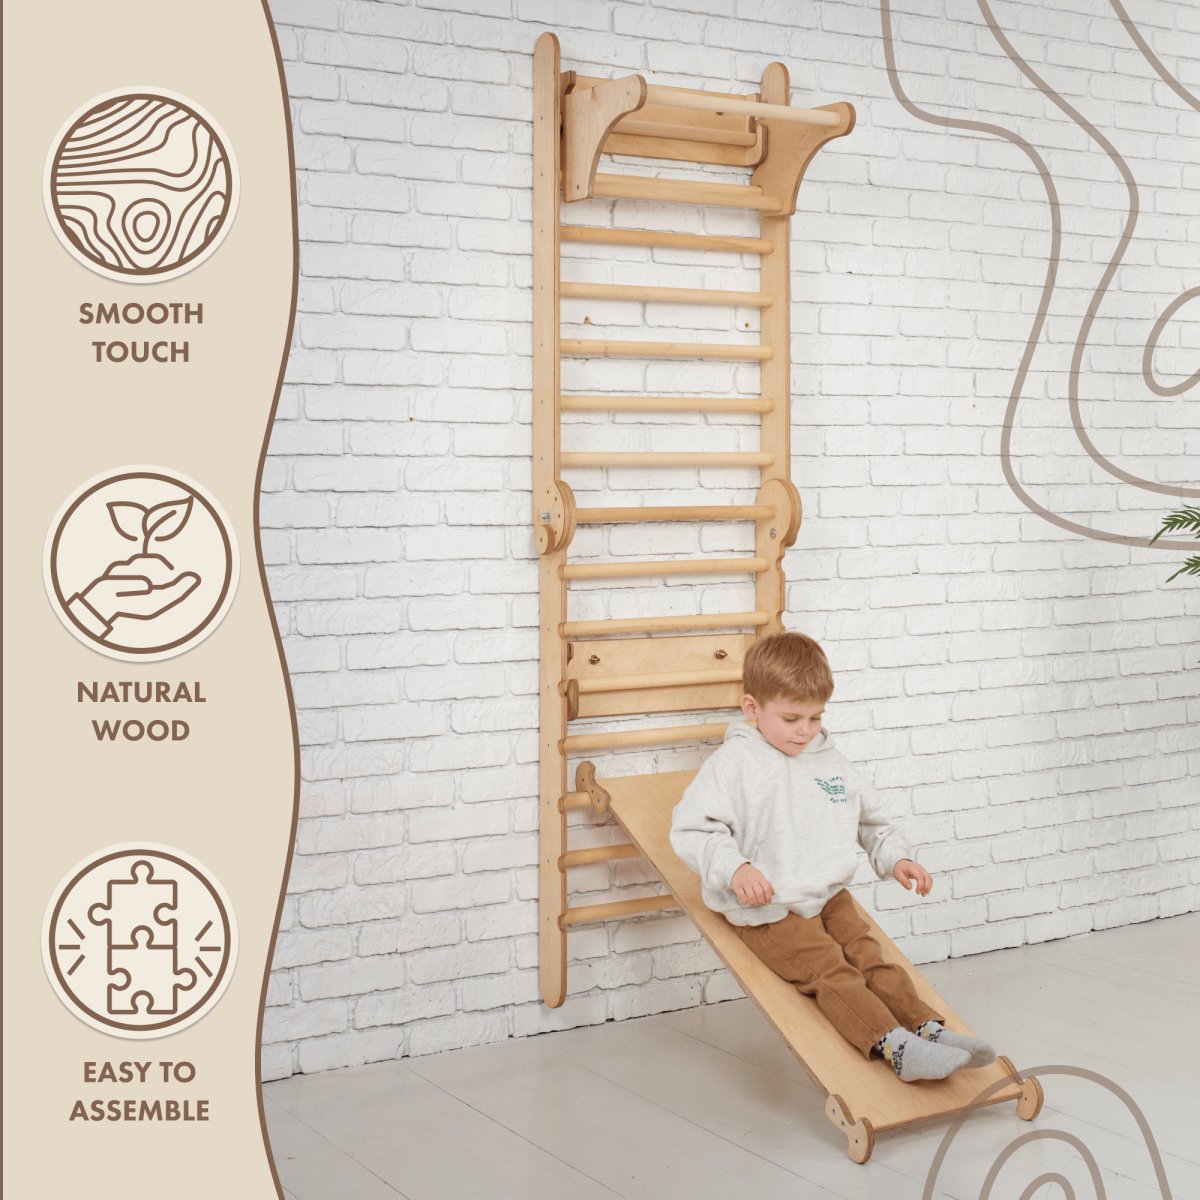 3in1: Wooden Swedish Wall / Climbing ladder for Children + Swing Set + Slide Board Goodevas